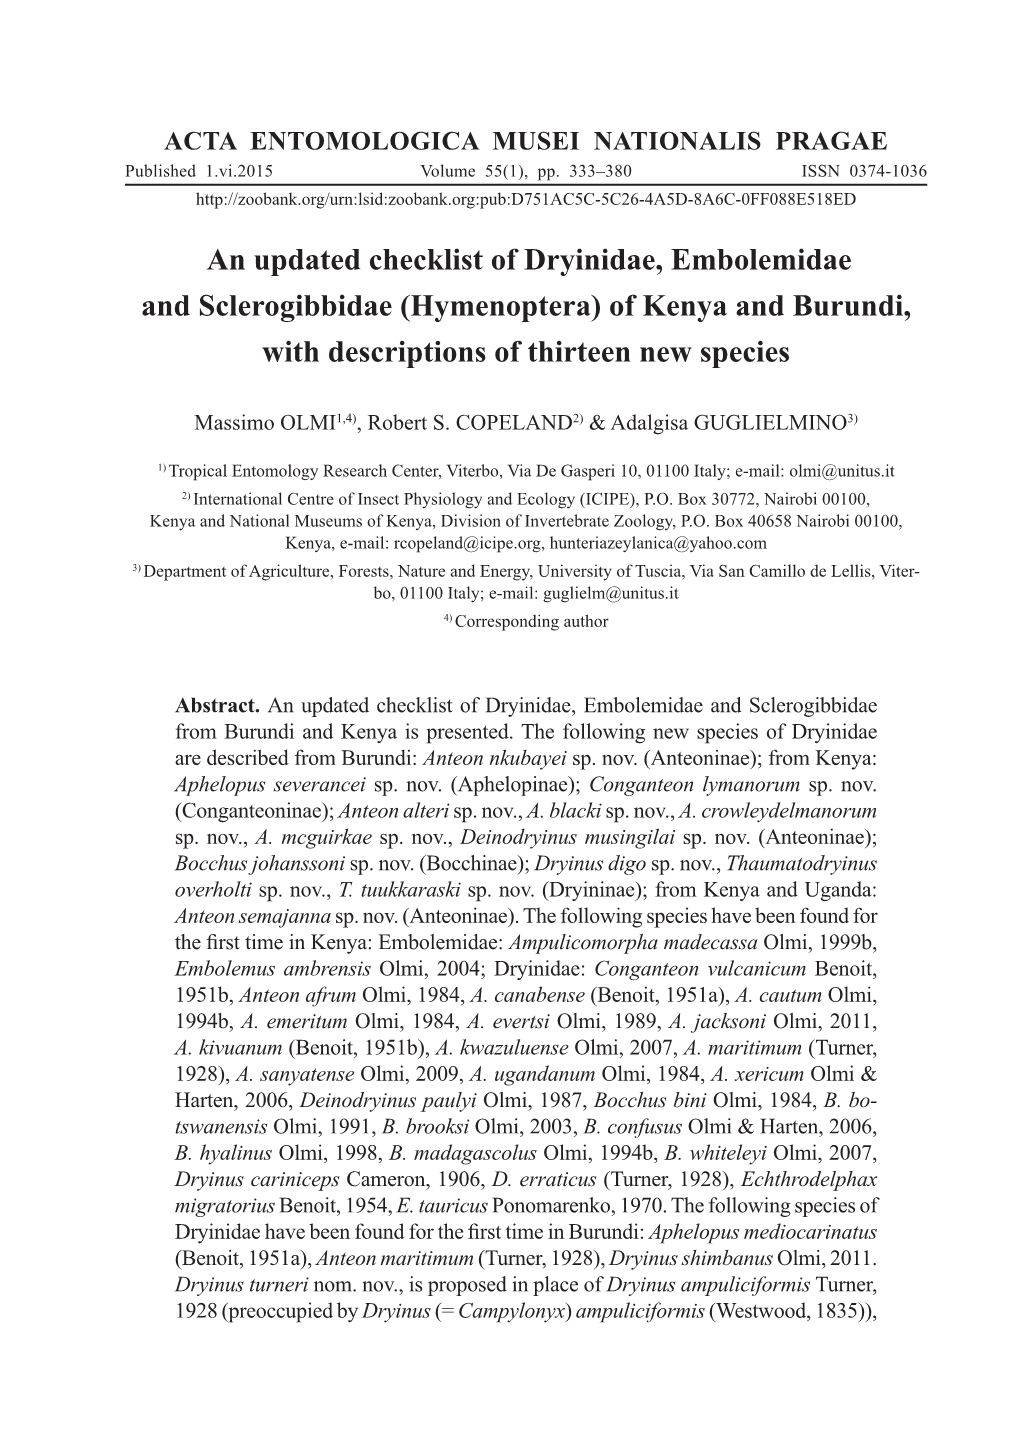 An Updated Checklist of Dryinidae, Embolemidae and Sclerogibbidae (Hymenoptera) of Kenya and Burundi, with Descriptions of Thirteen New Species